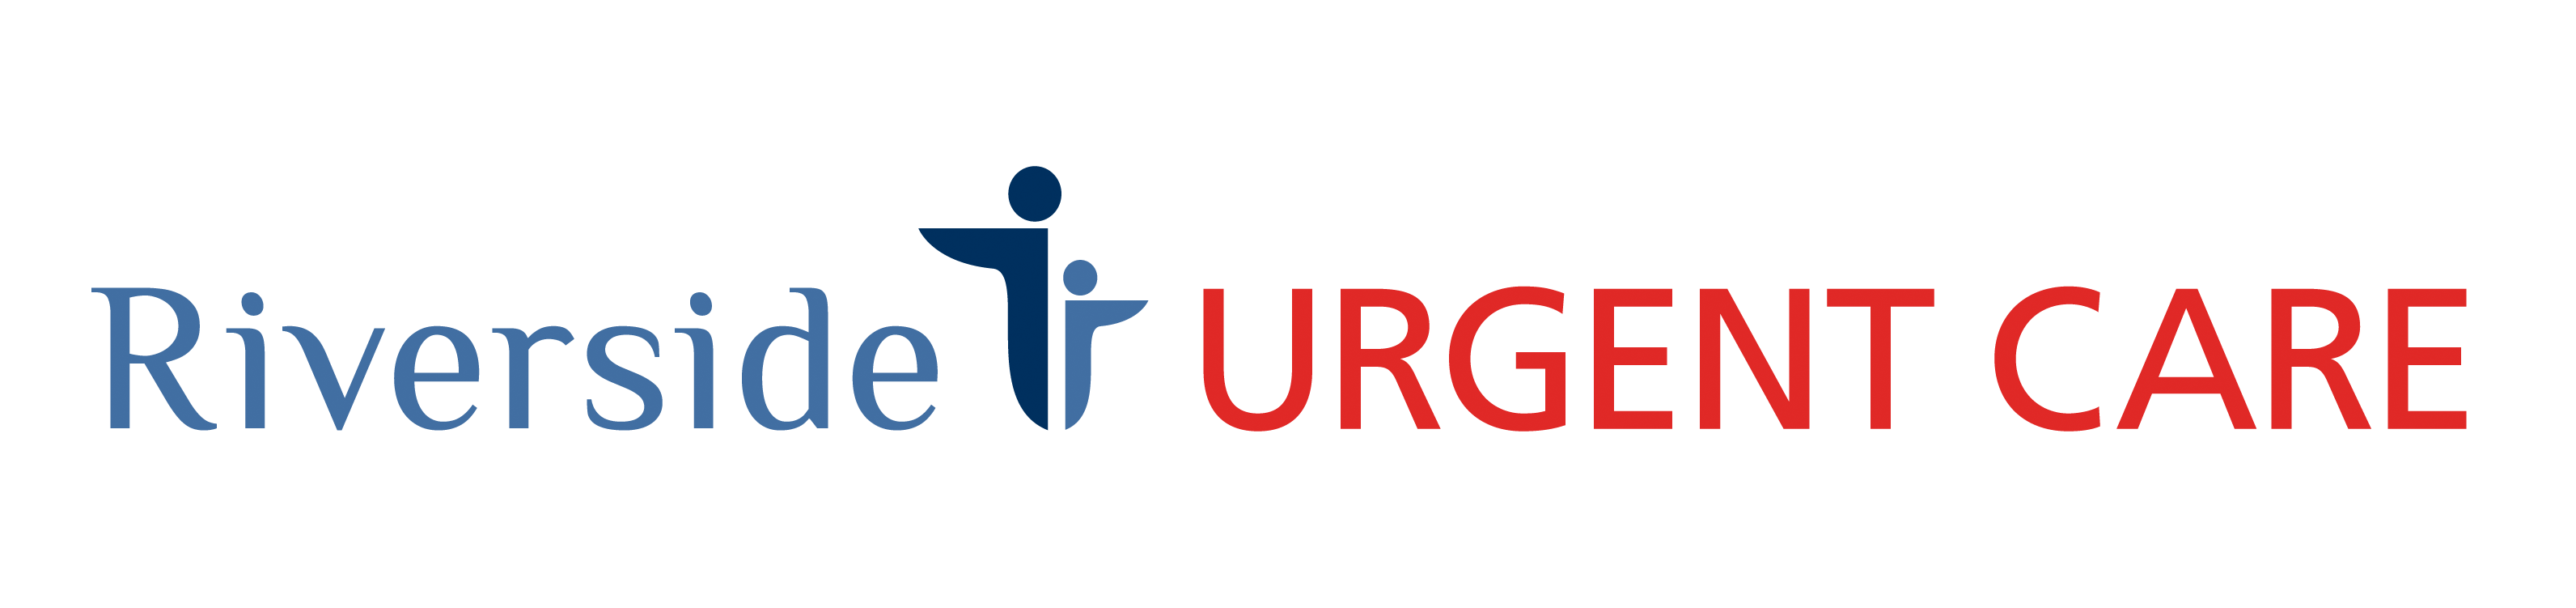 Optum Urgent Care - Vineland South Logo